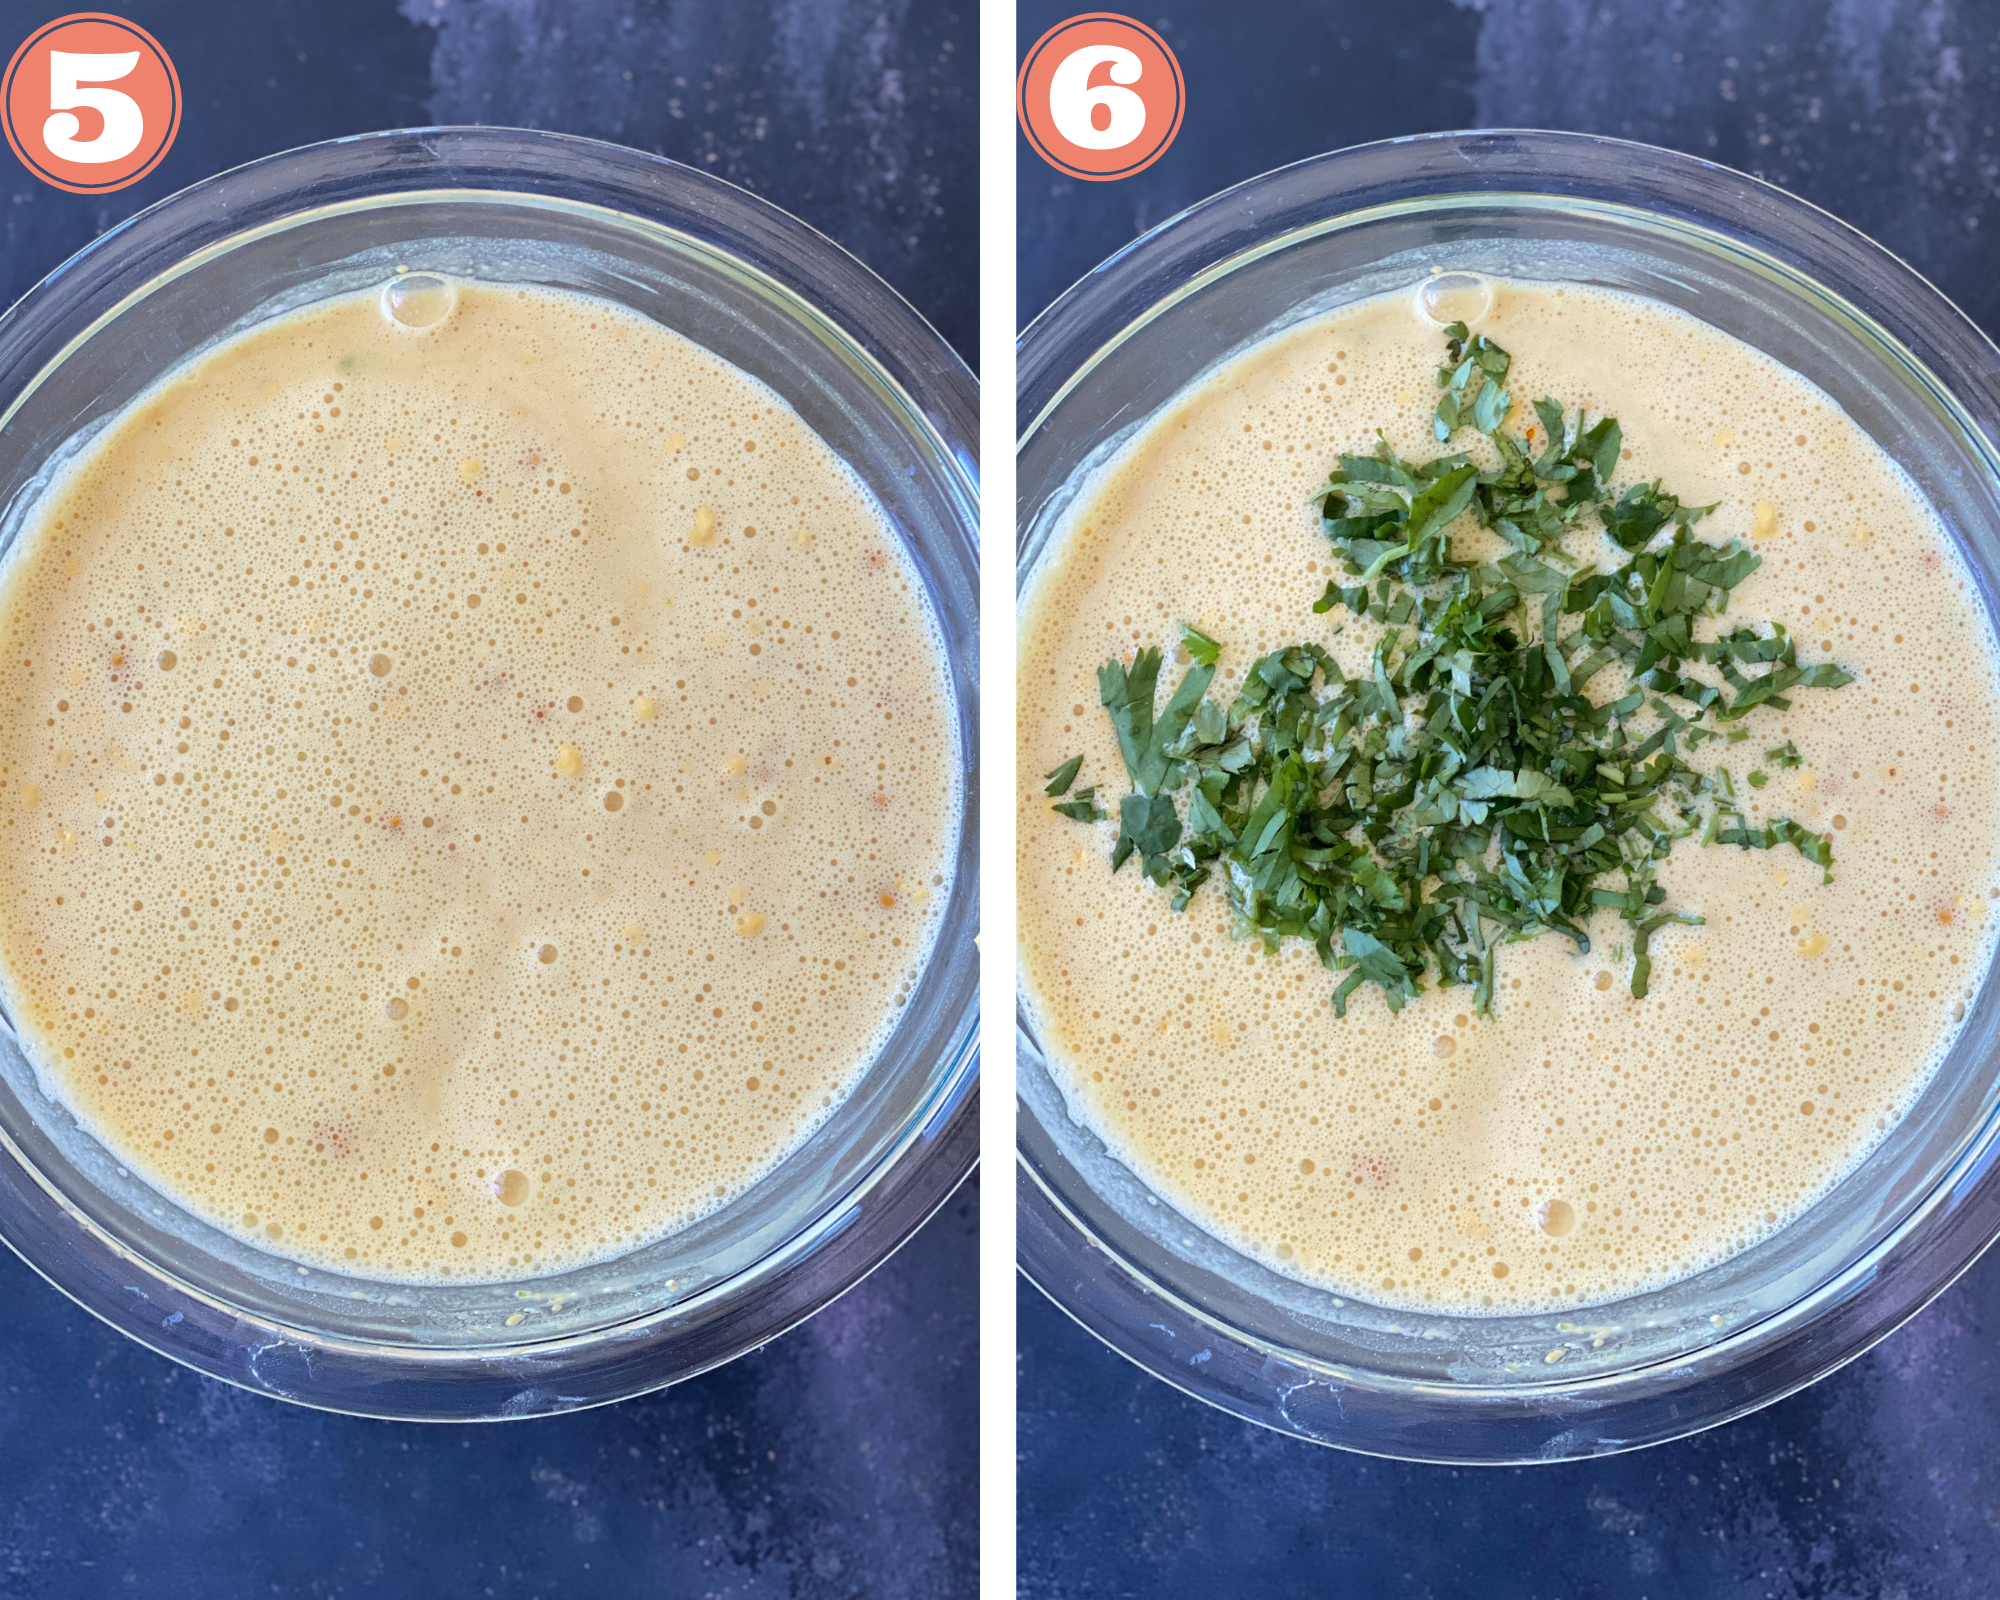 Collage steps to make dhokli khandvi; make a lump free batter and add cilantro. 